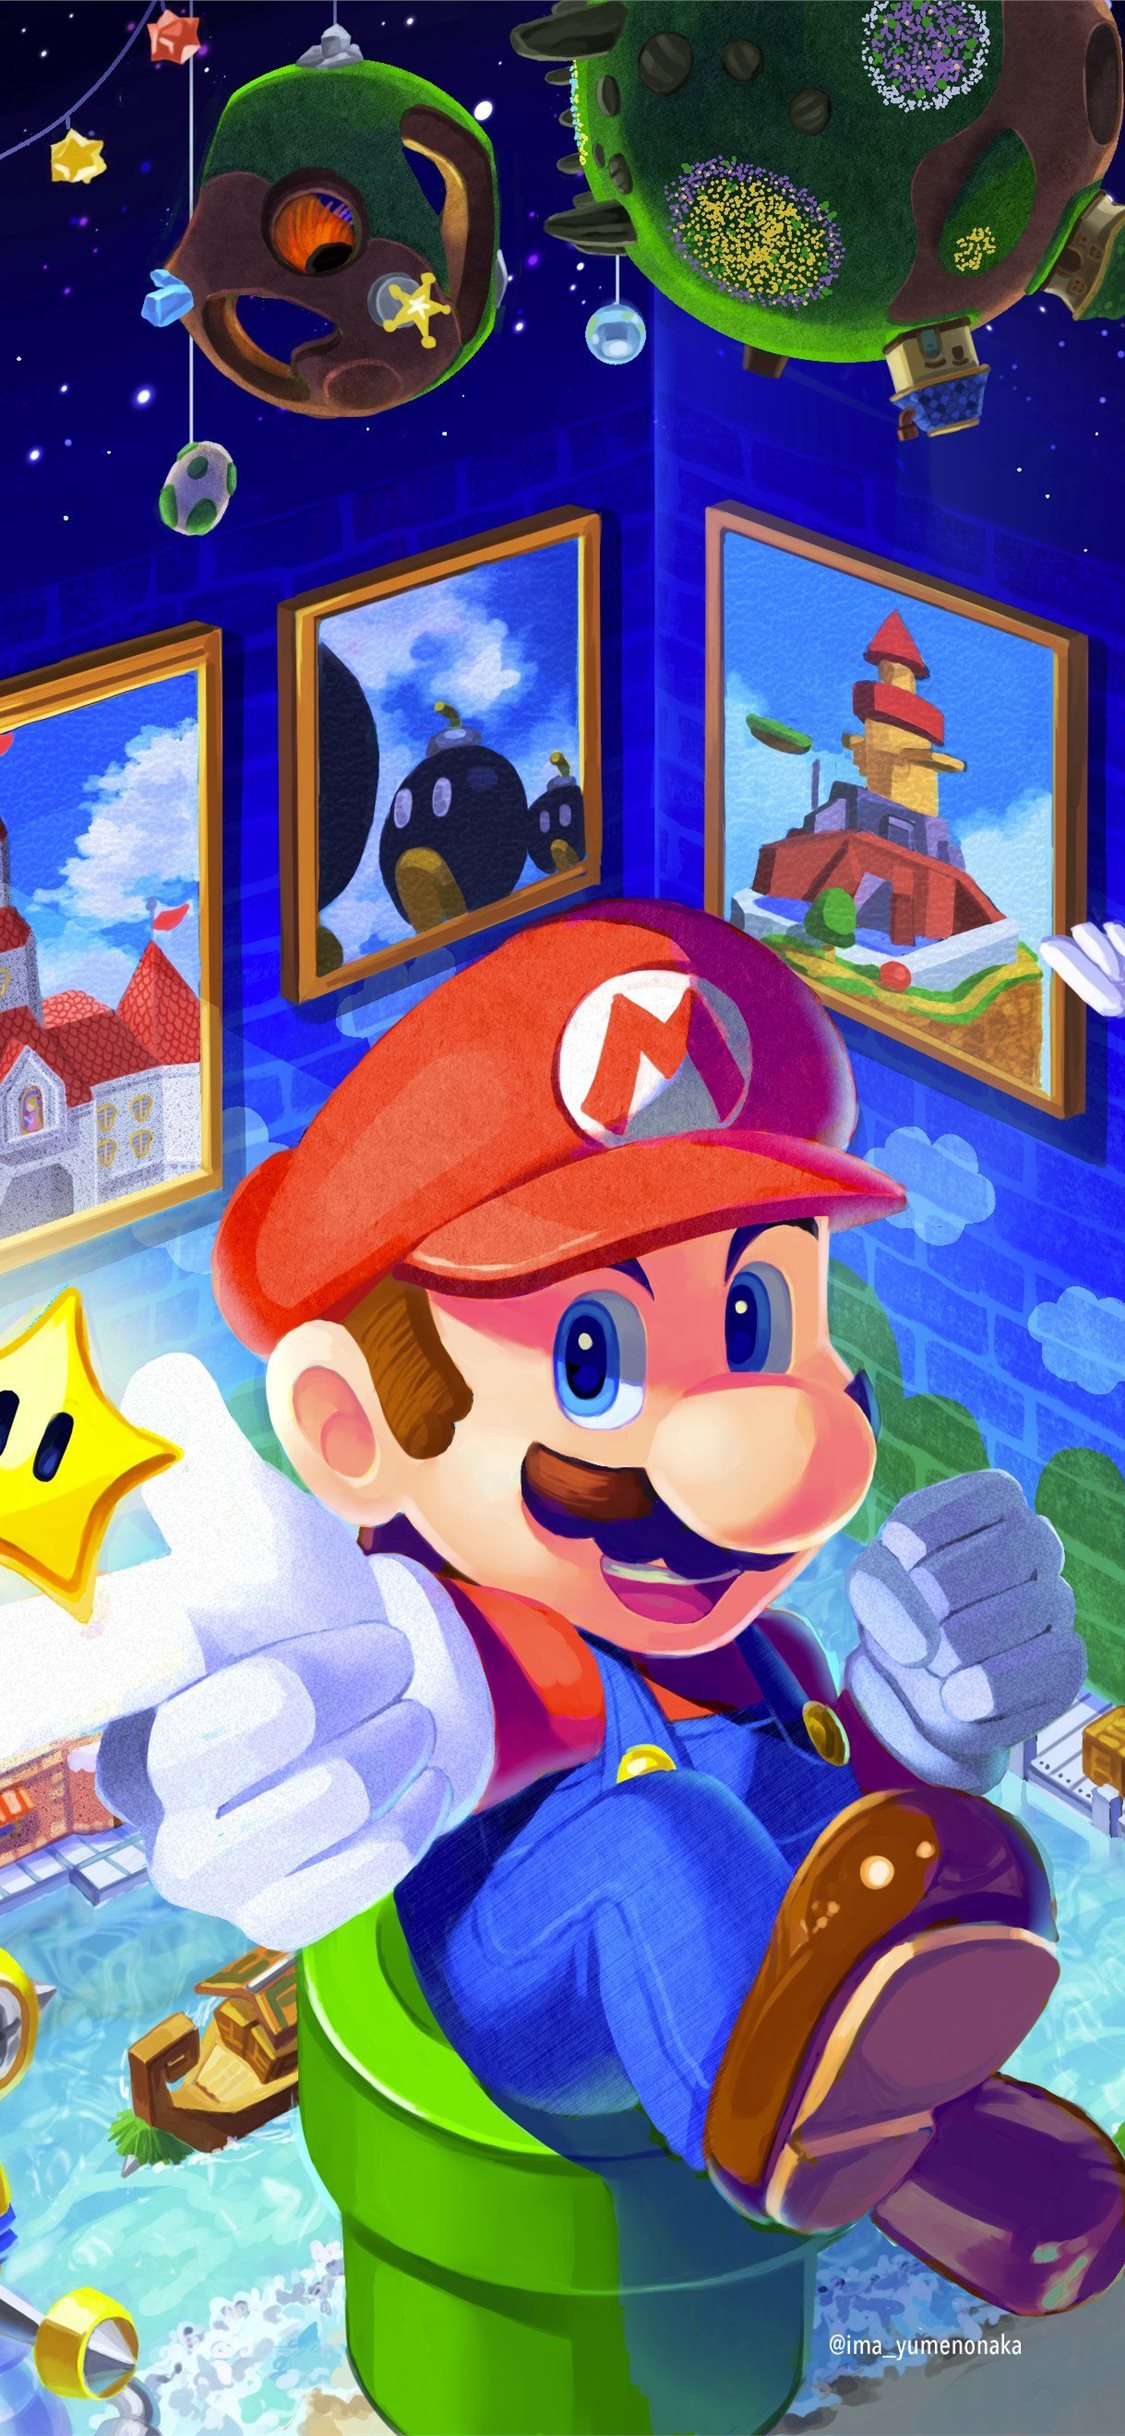 Super Mario World iPhone wallpaper  RETINA res by SolidAlexei on DeviantArt